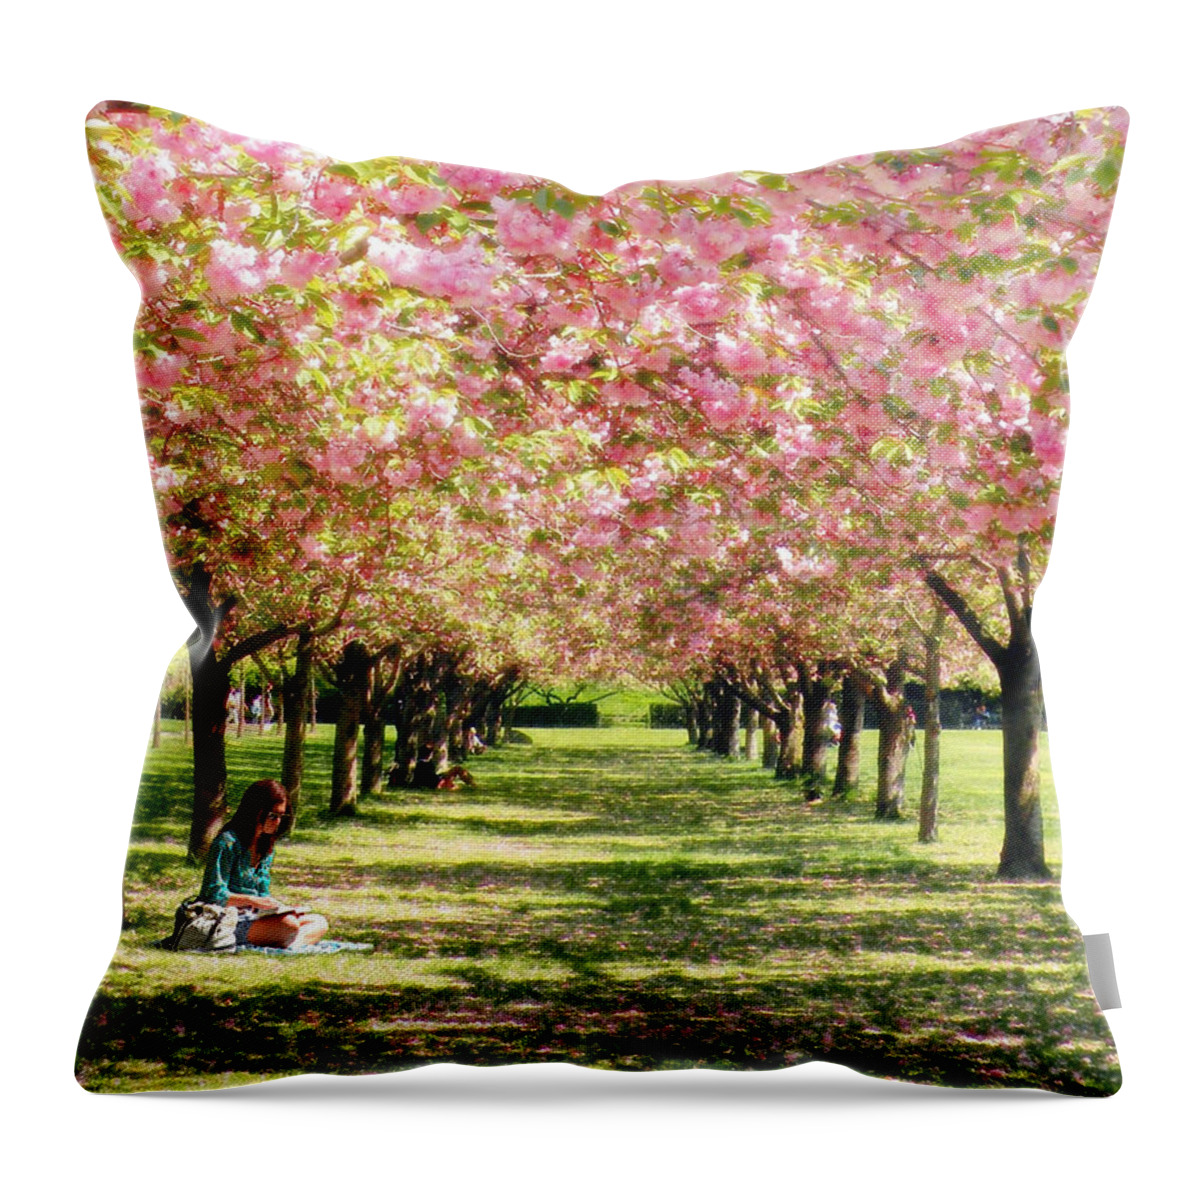 Cherry Blossom Trees Throw Pillow featuring the photograph Under The Cherry Blossom Trees by Nina Bradica